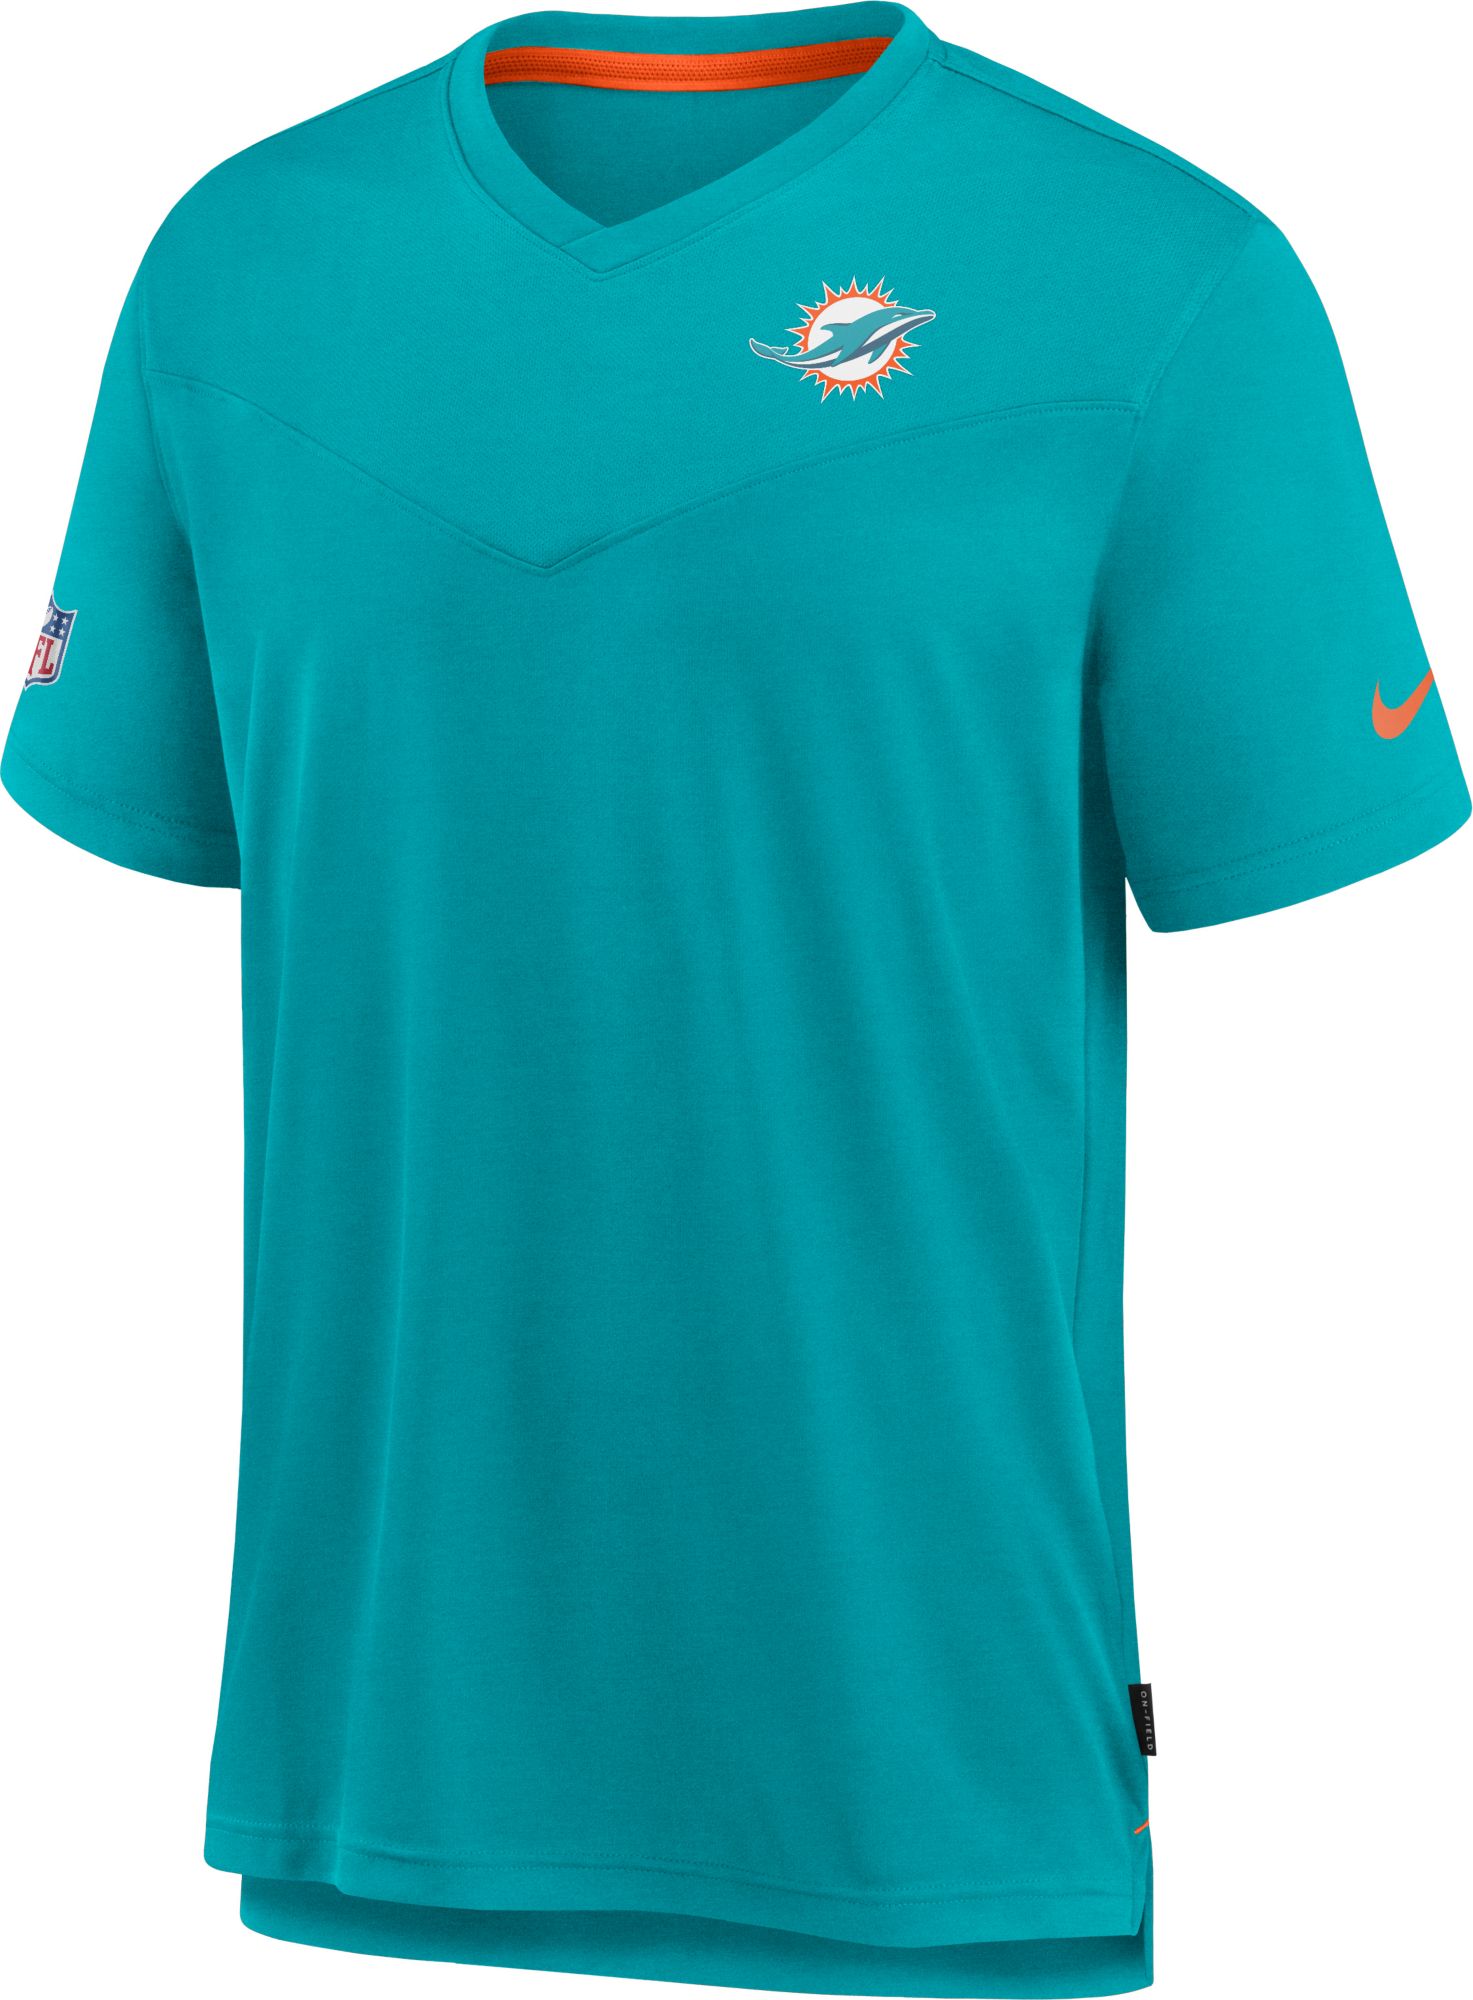 Nike / Men's Dayton Flyers Blue Dri-FIT Velocity Stencil T-Shirt